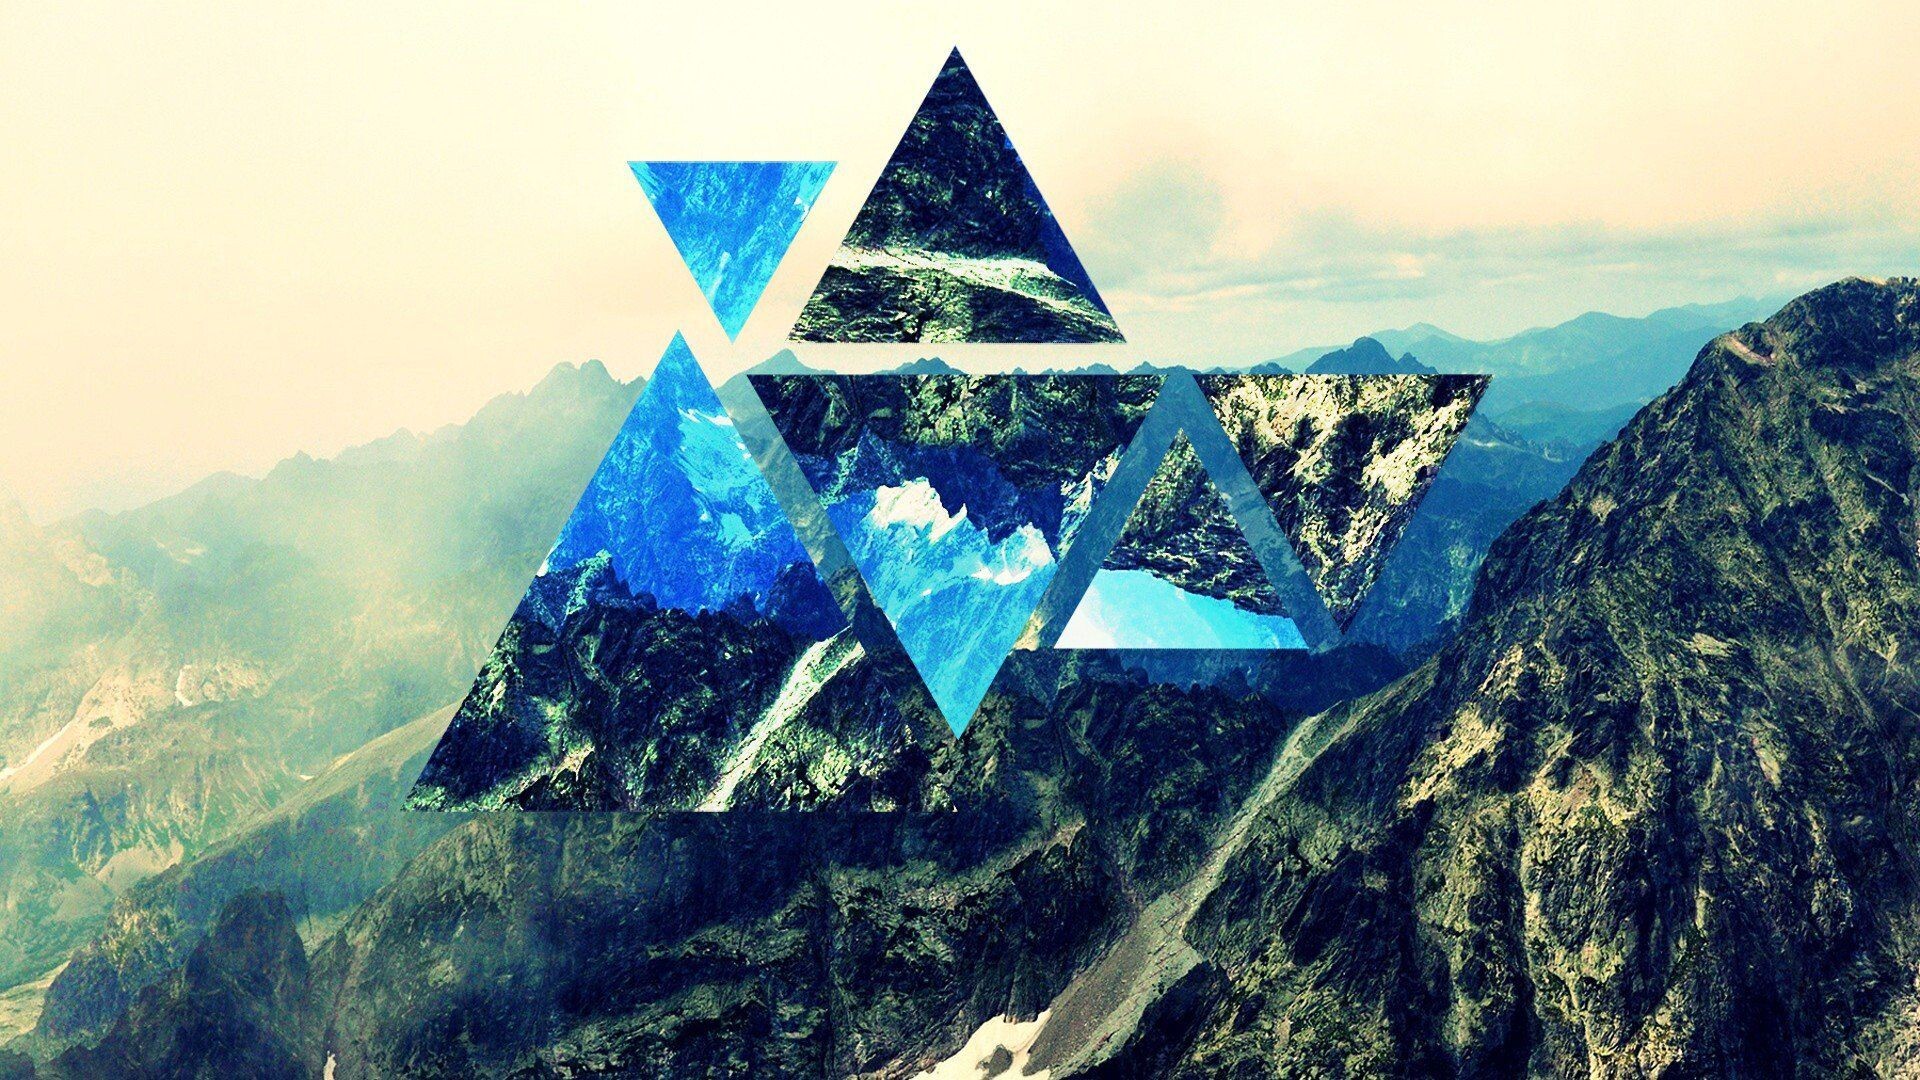 Triangle: Mountain range,  Natural landscape, Polygons, Digital art. 1920x1080 Full HD Wallpaper.